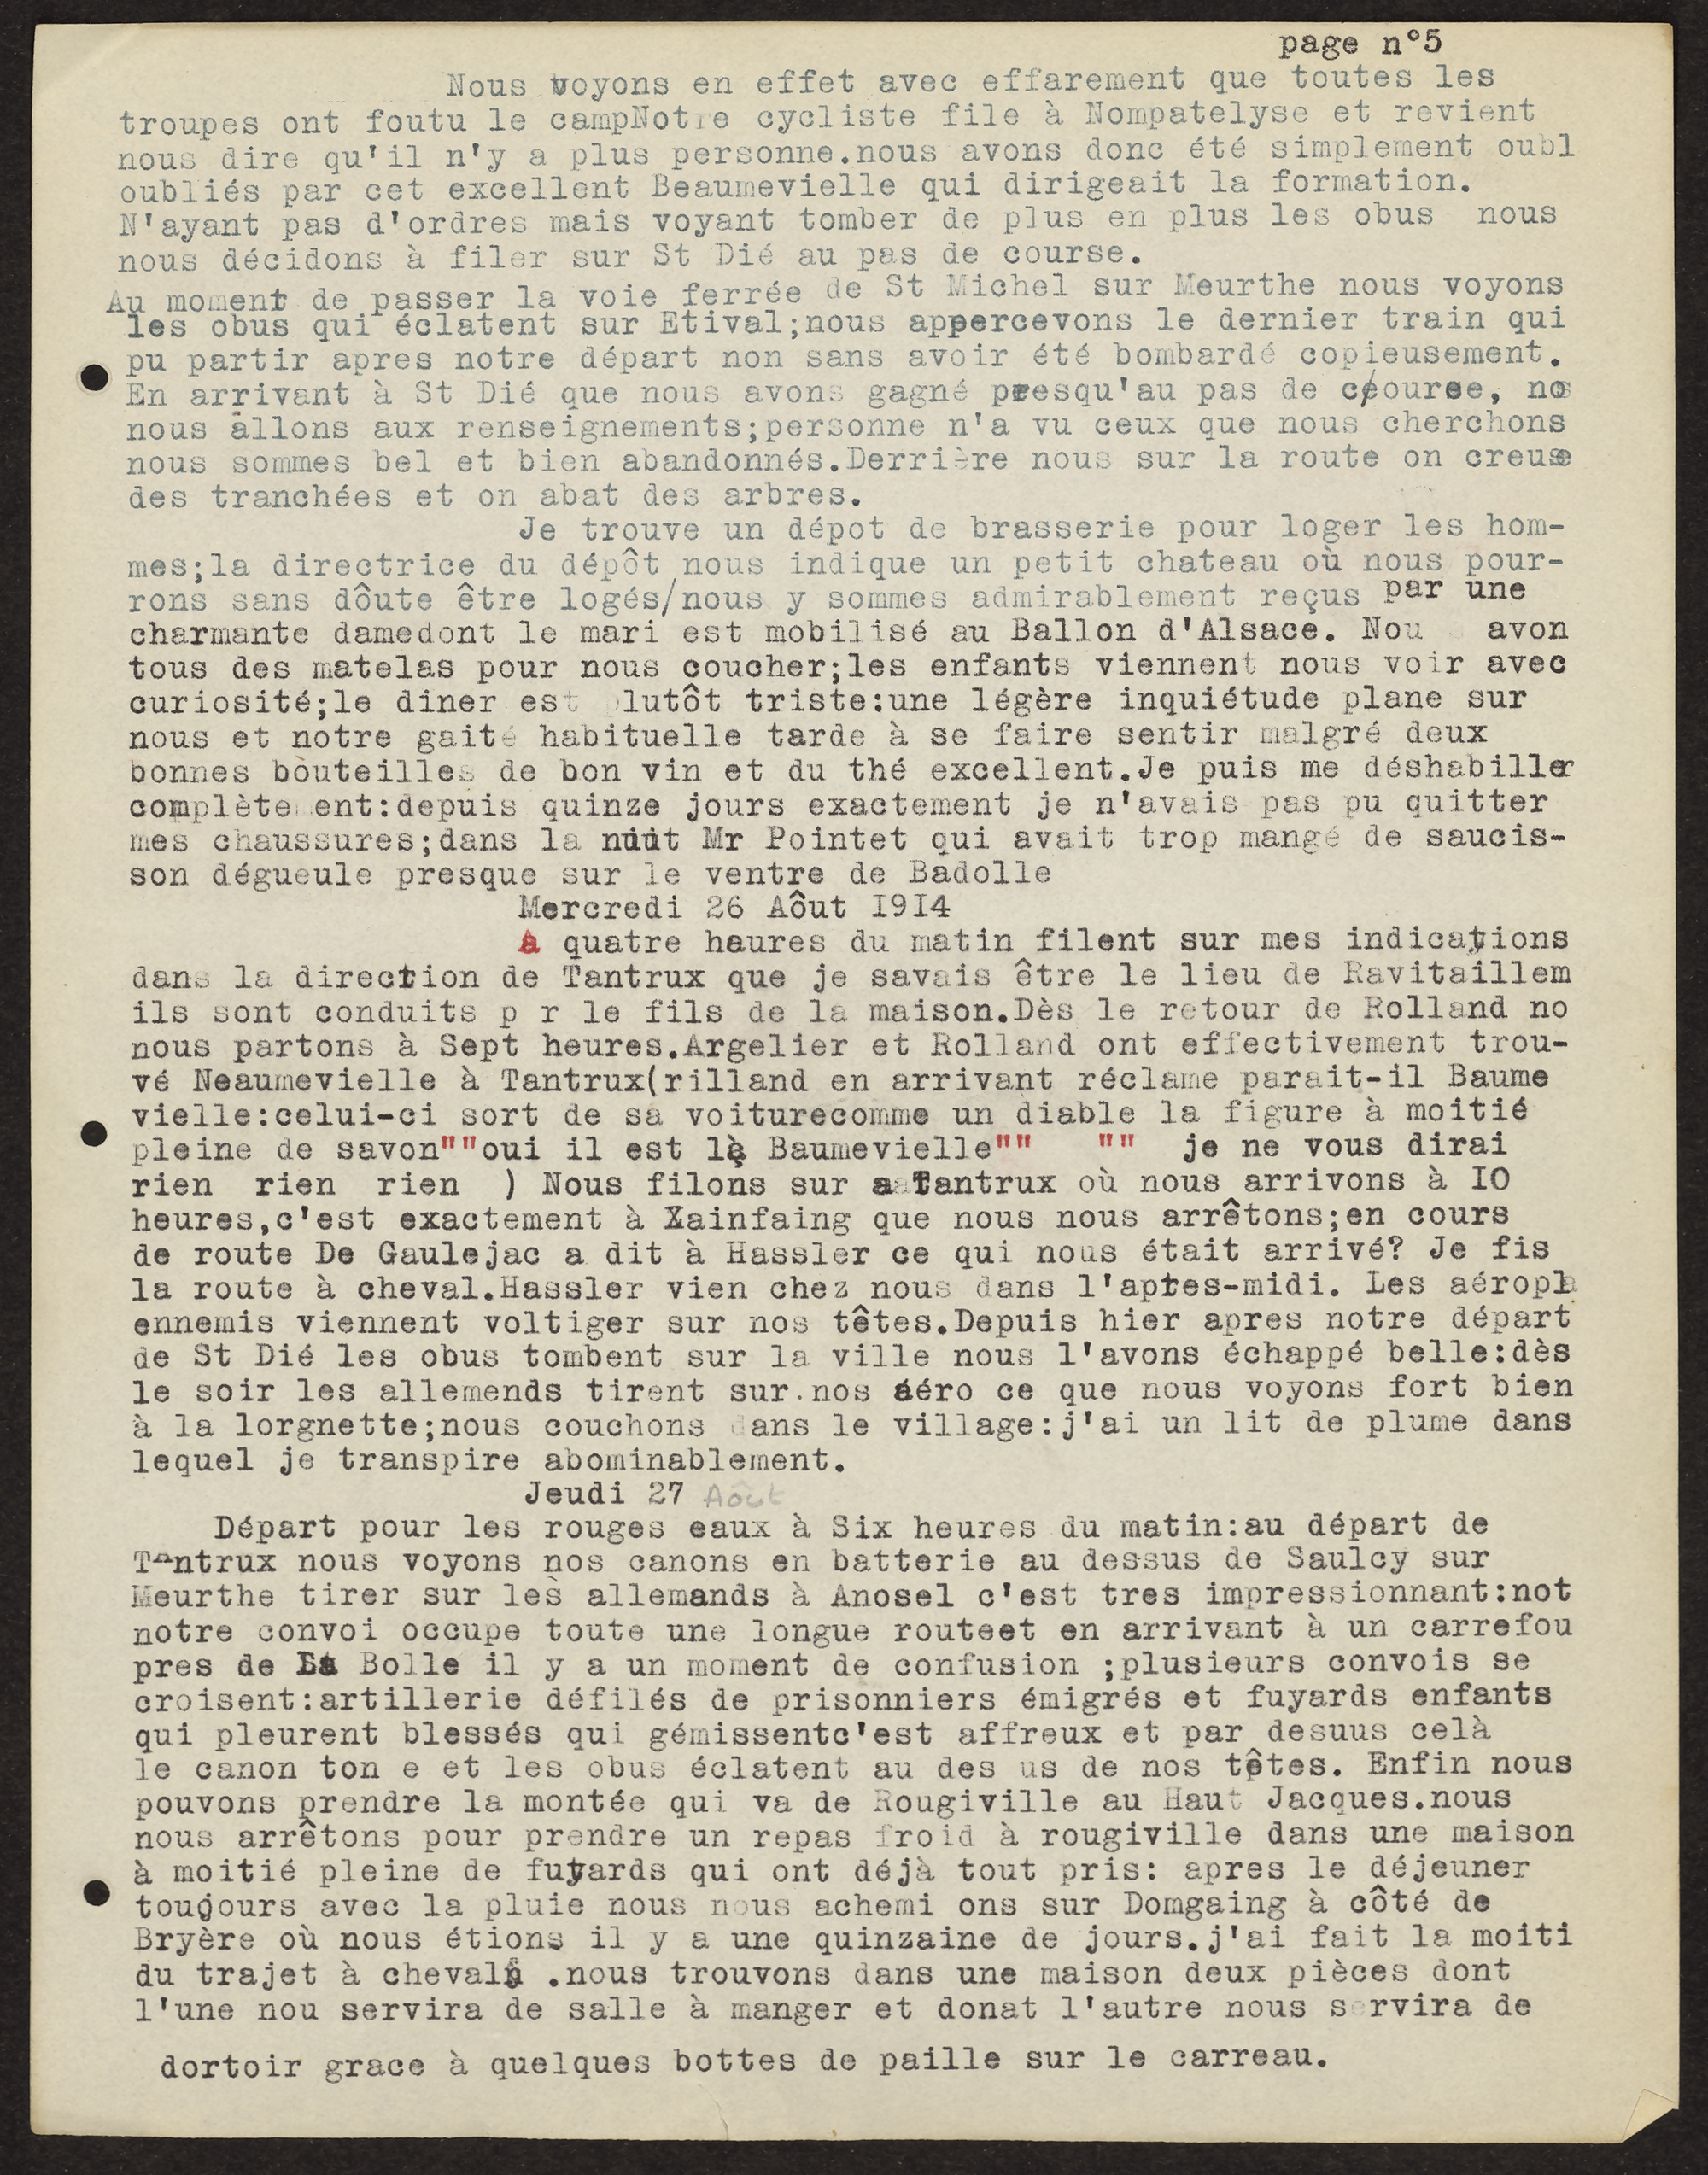 Journal de campagne d'Auguste Verrière, 25 août 1914 - 1ii/506/1